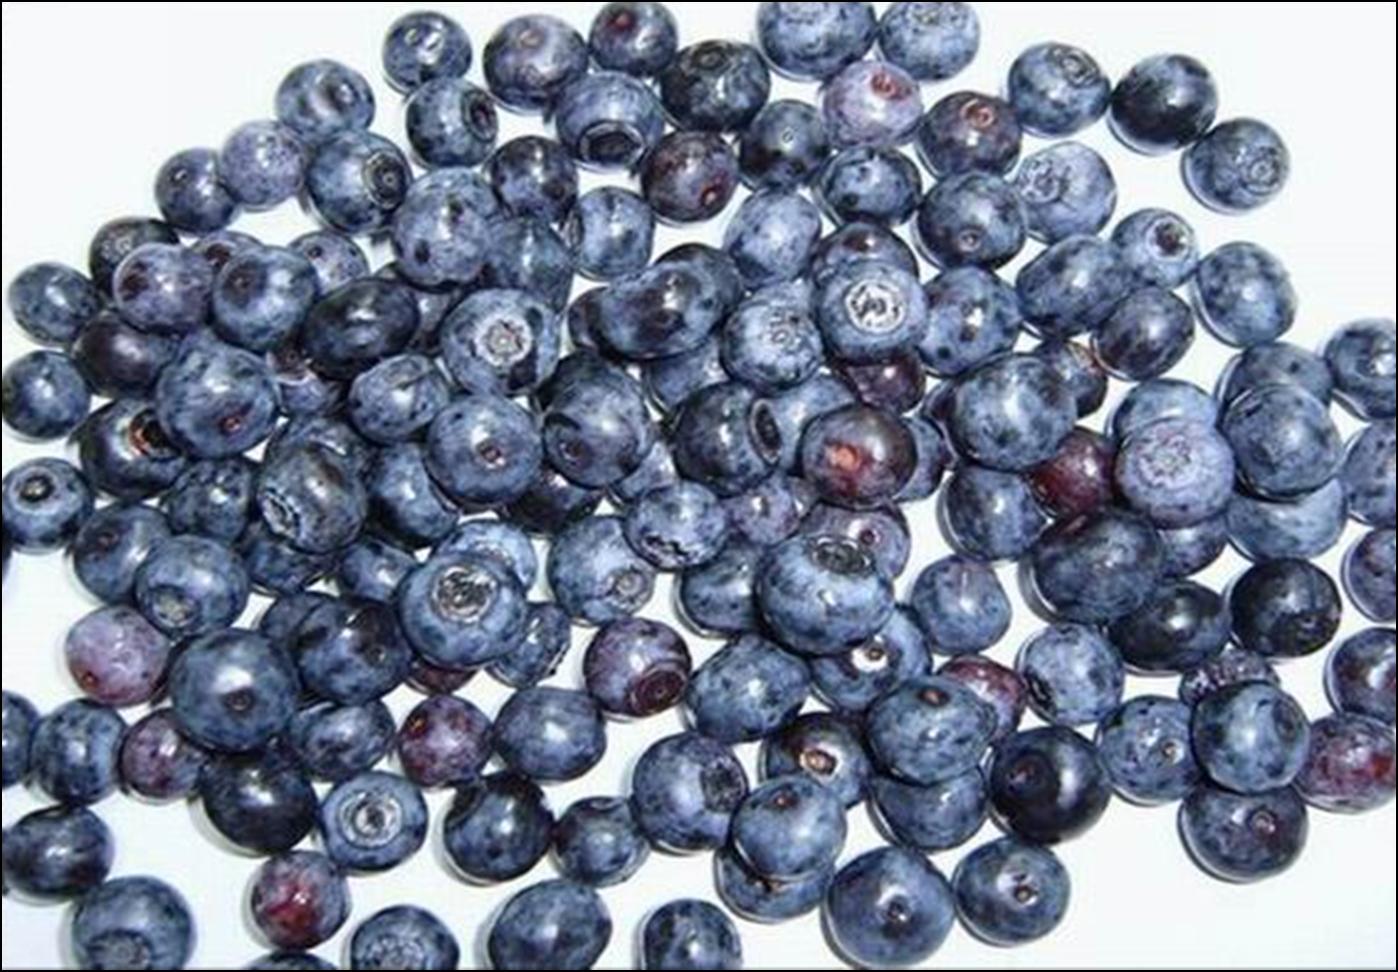 IQF blueberry